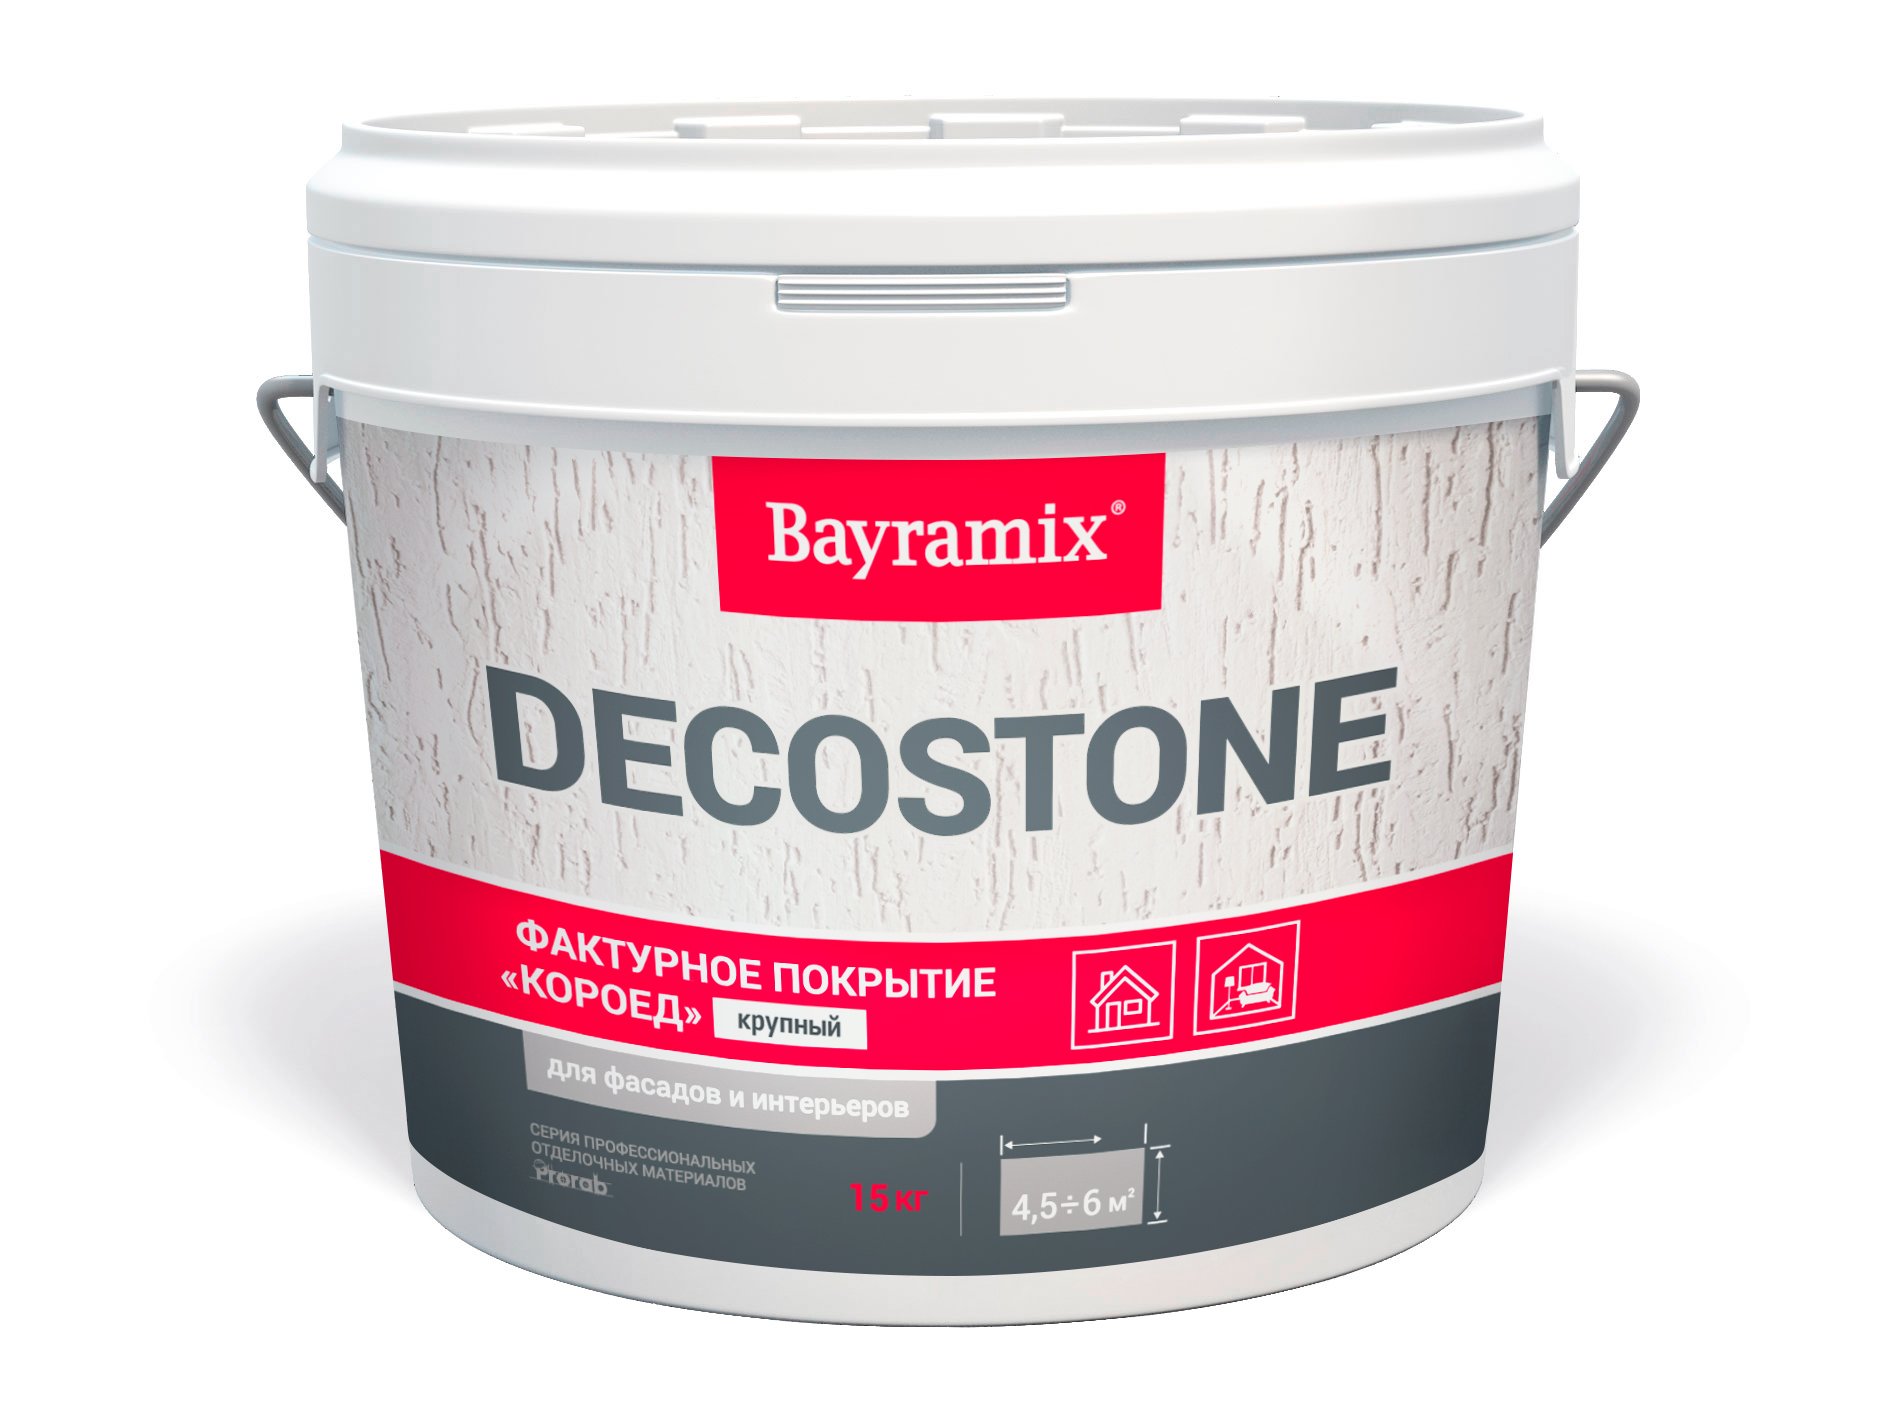 Фасадная штукатурка короед Bayramix Decostone (крупная), 15 кг фасадная штукатурка основит